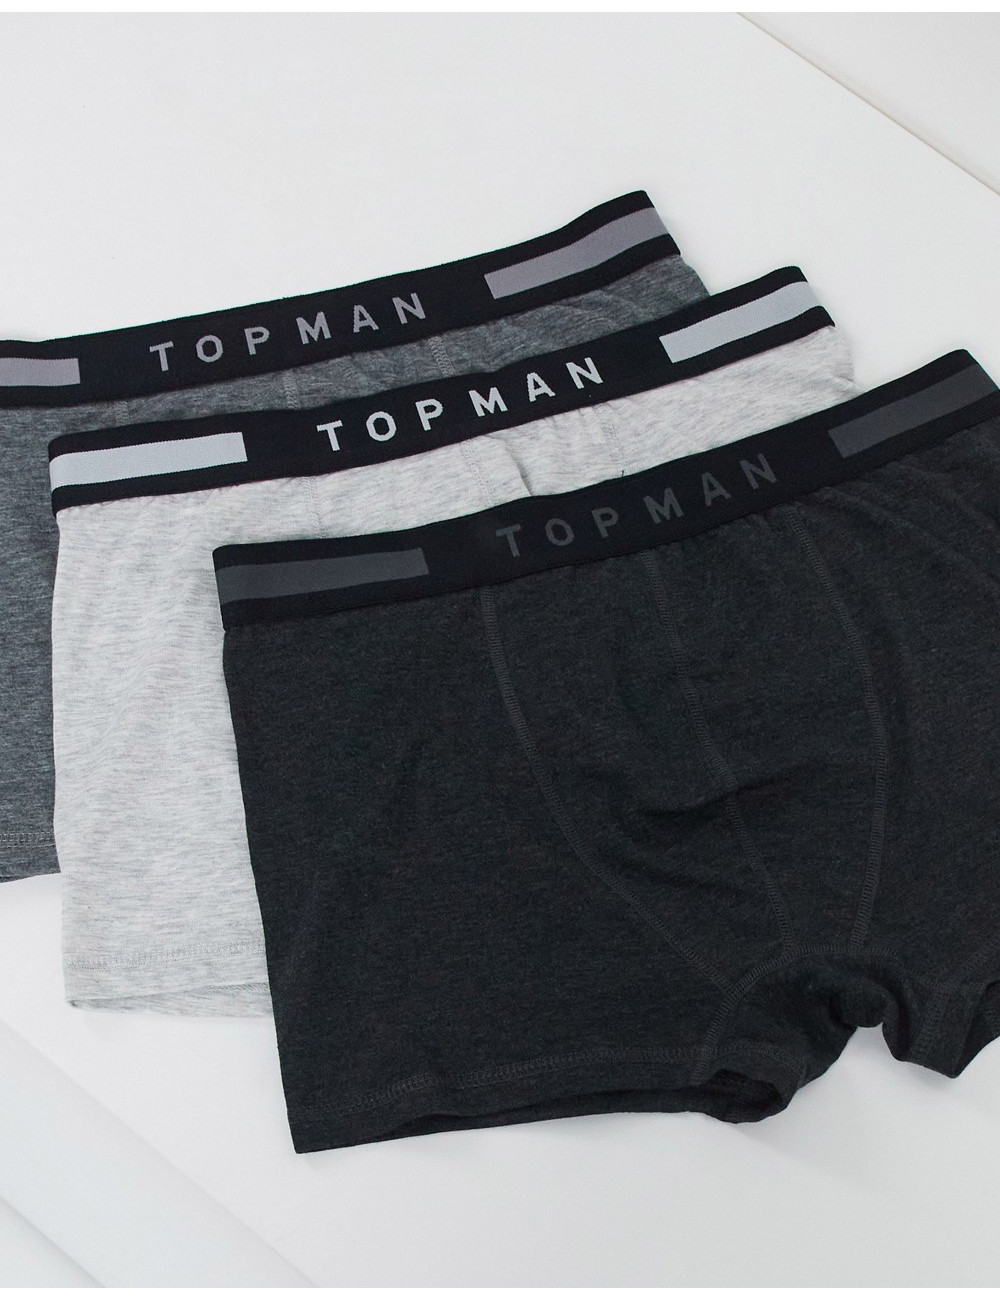 Topman 3 pack trunks in grey